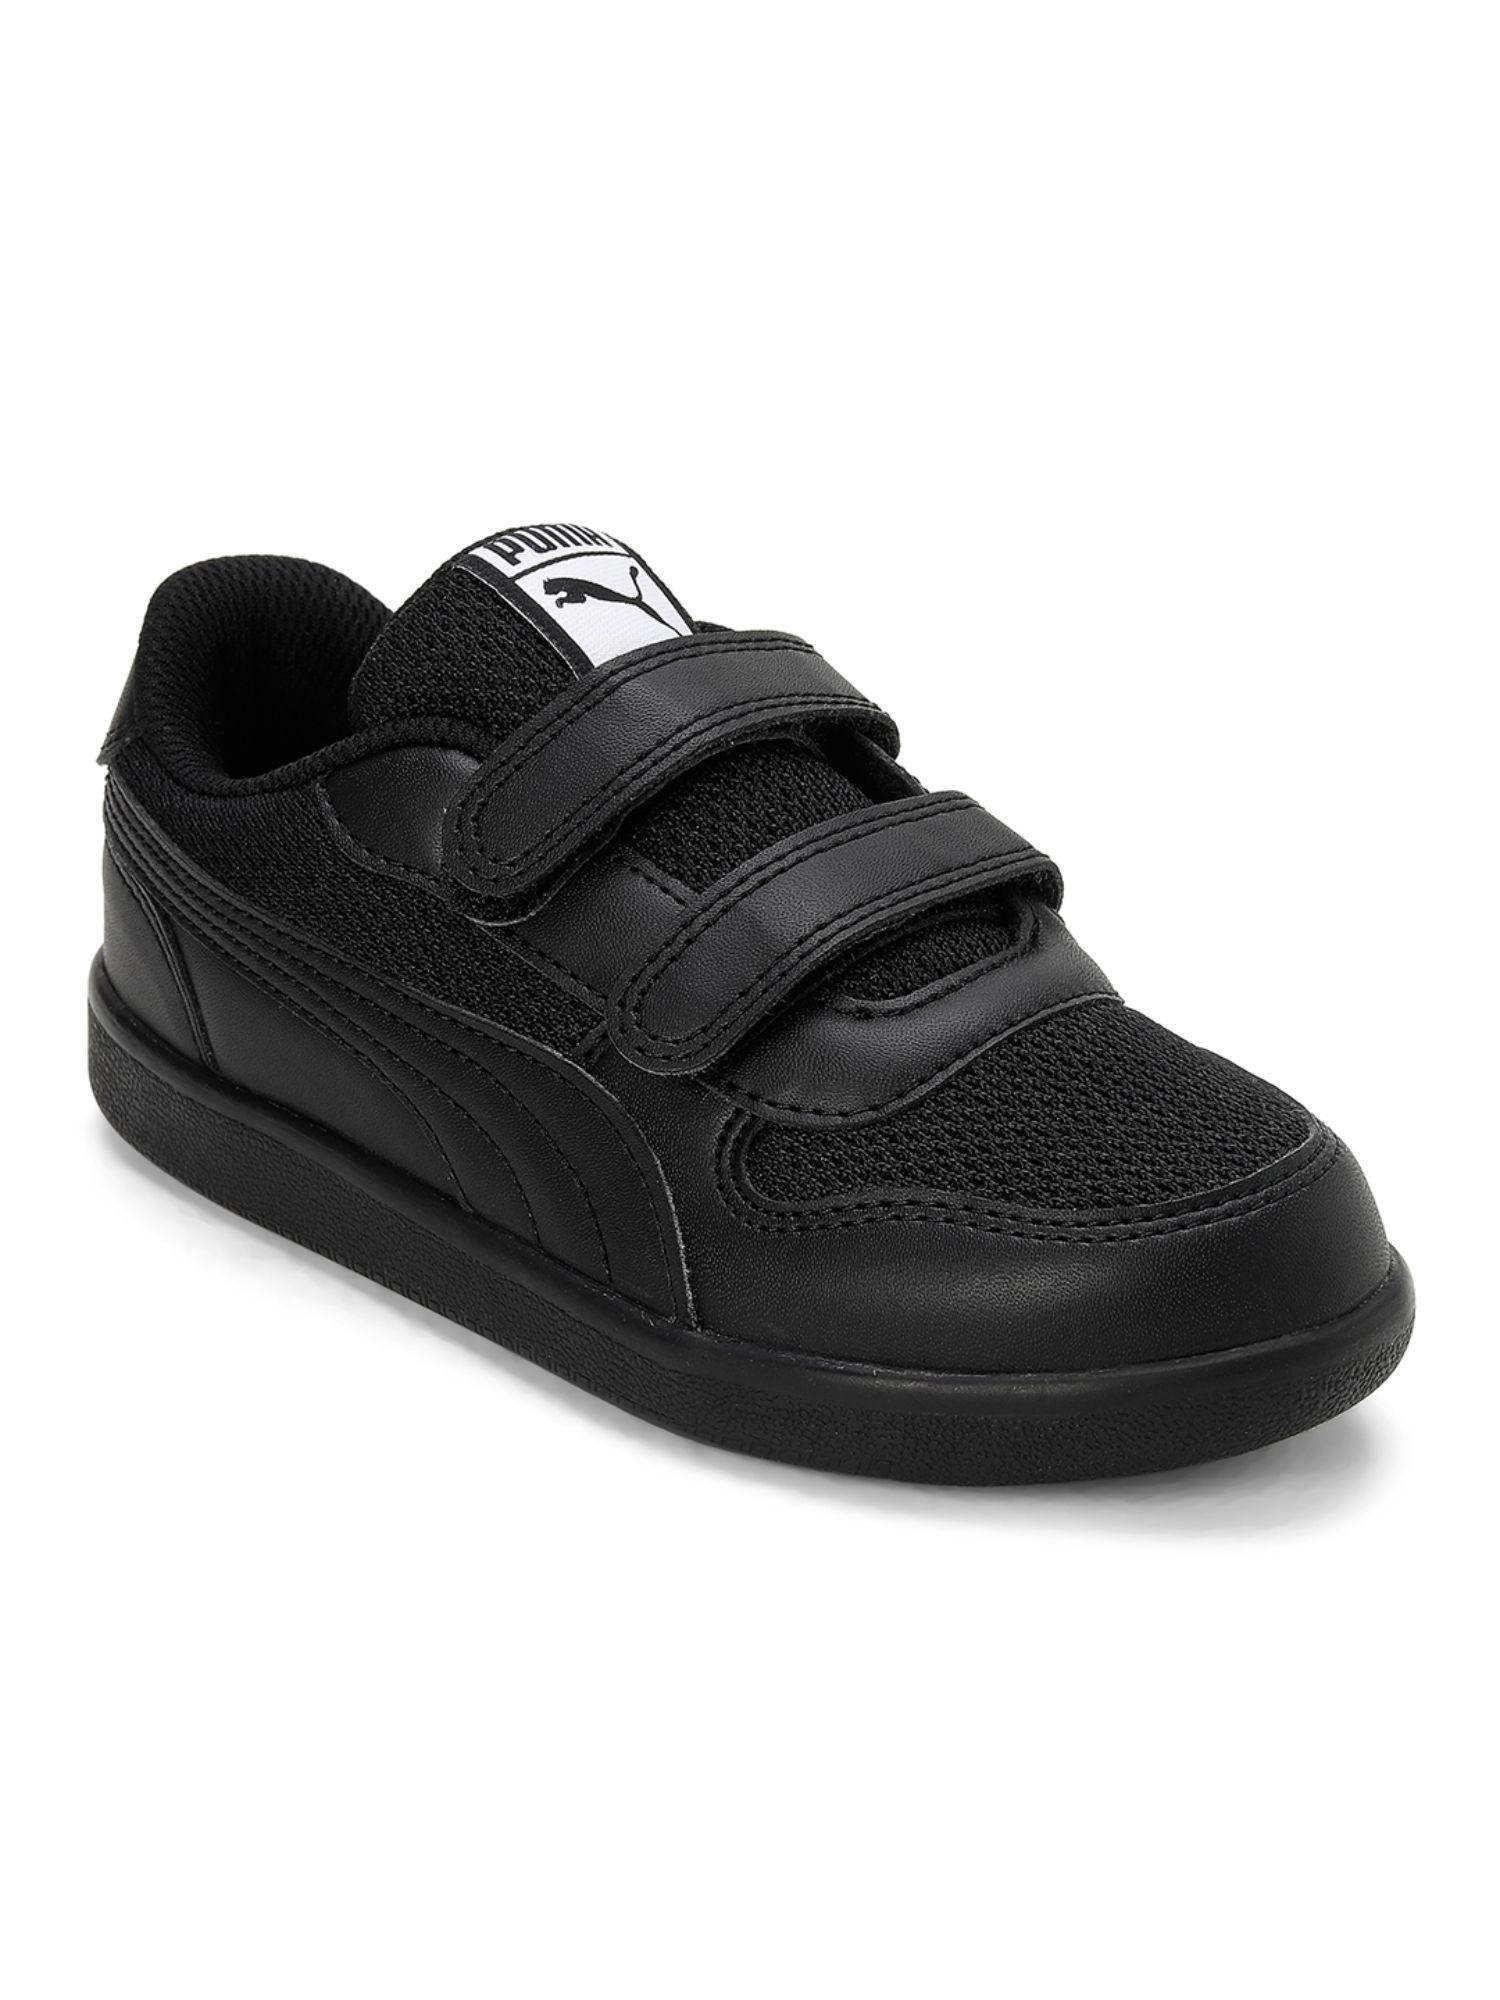 punch comfort preschool kids black casual shoes